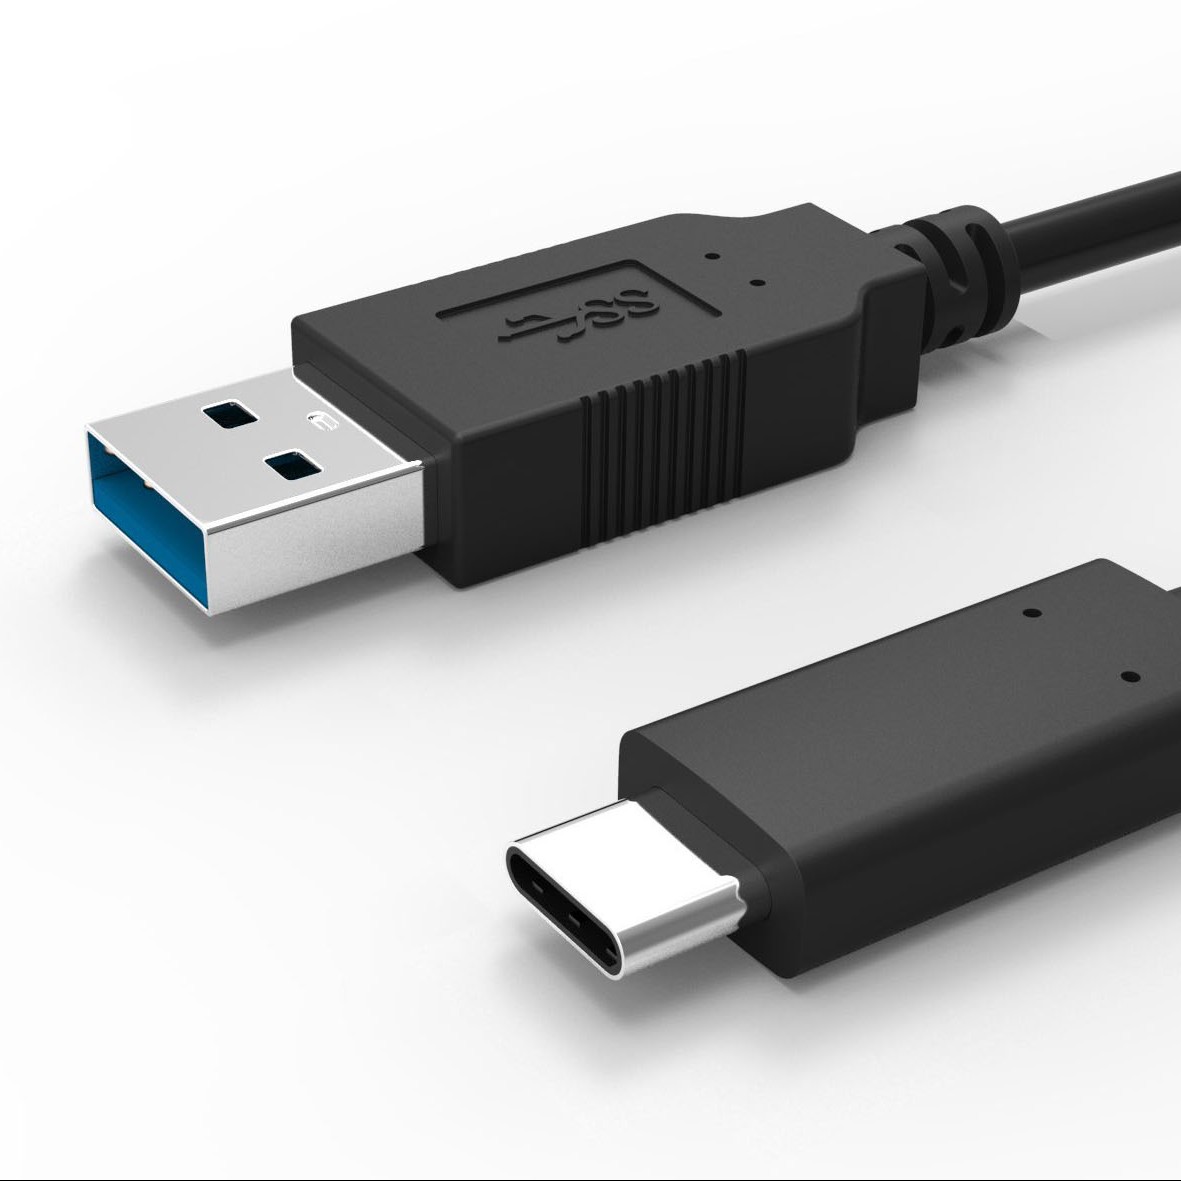 Usb c connector. Кабель USB 3 0 на тайп си. USB Type-c кабель USB 3.1. Type b USB Cable. Кабель USB 3.0 Type-c 3a fast charge.